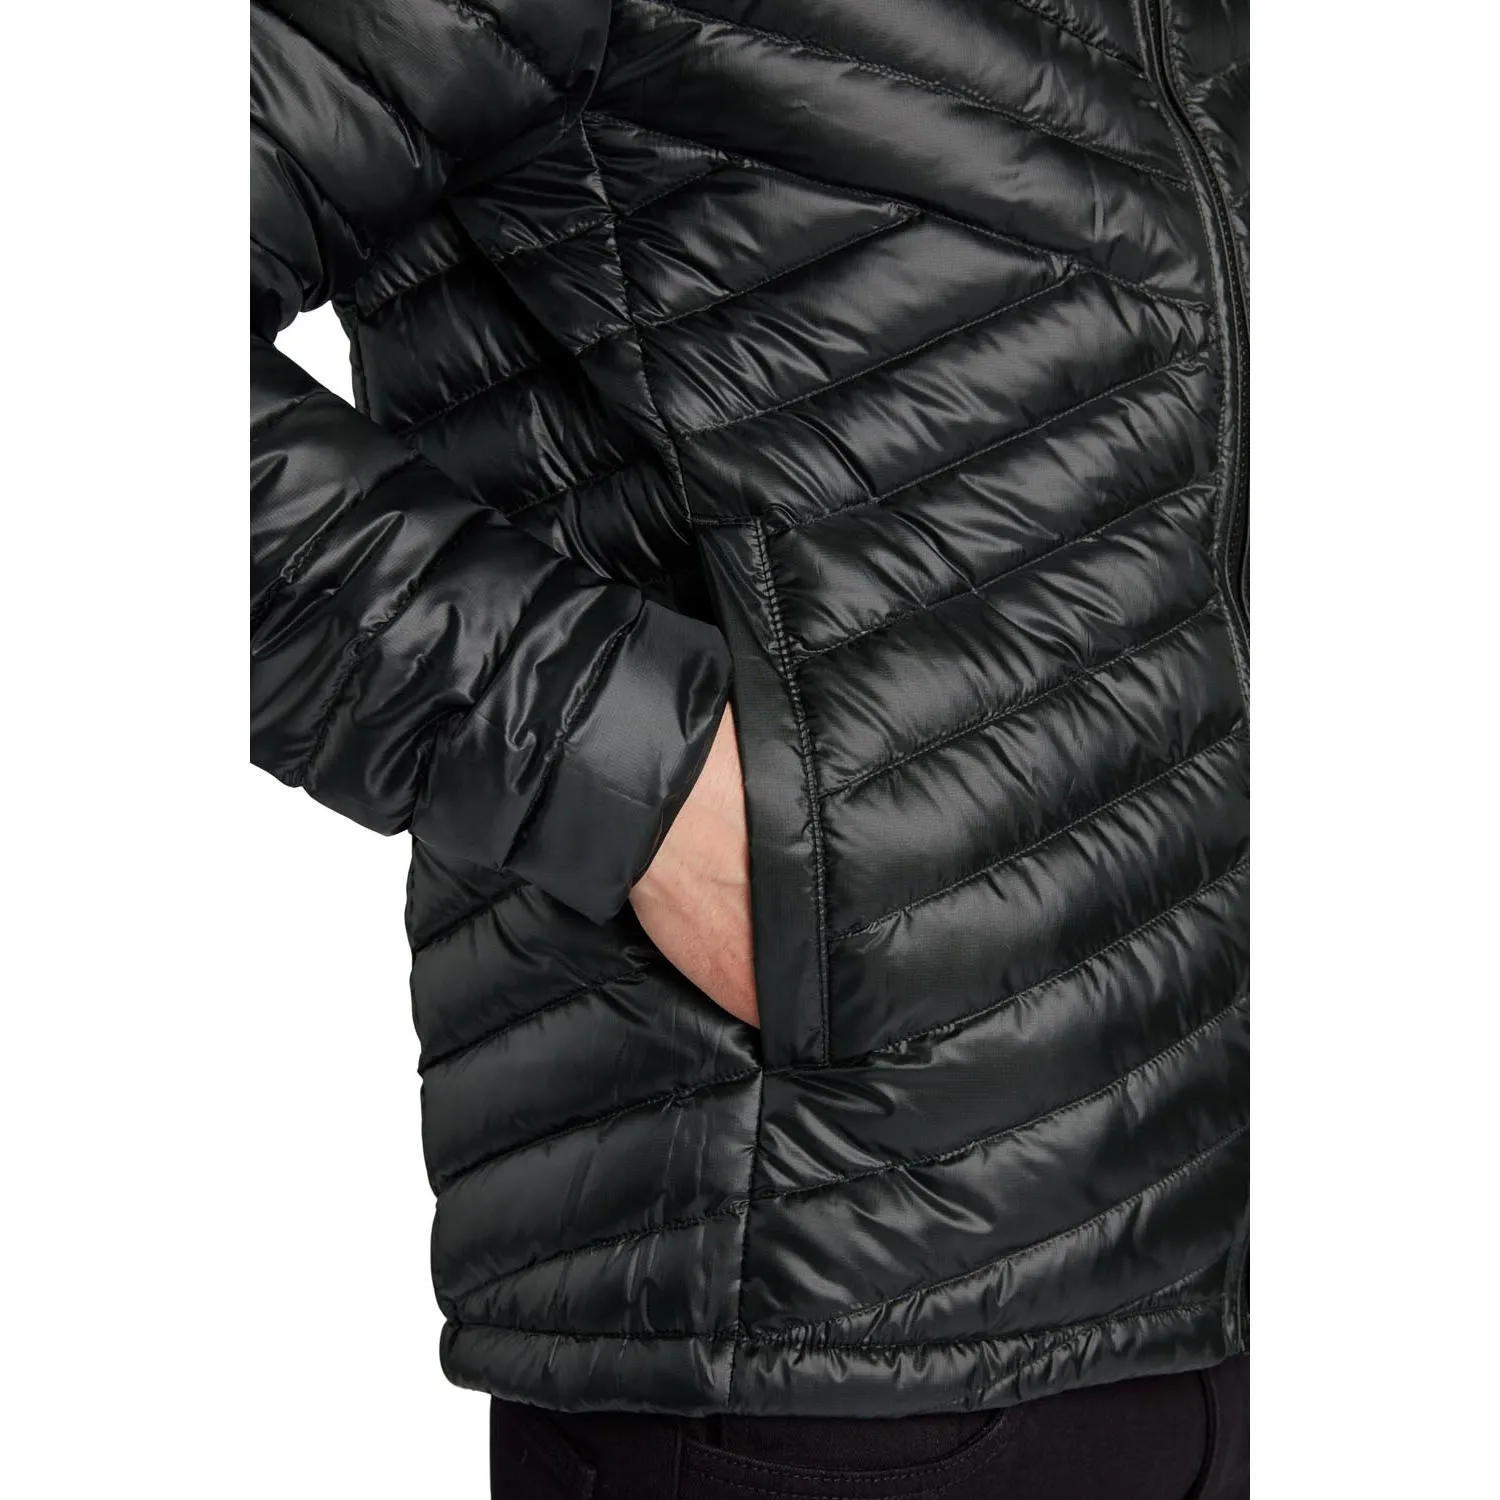 62_Nao-1059-3-in-1-jacket-for-men-Y-by-Nordisk-black-model-07.jpg